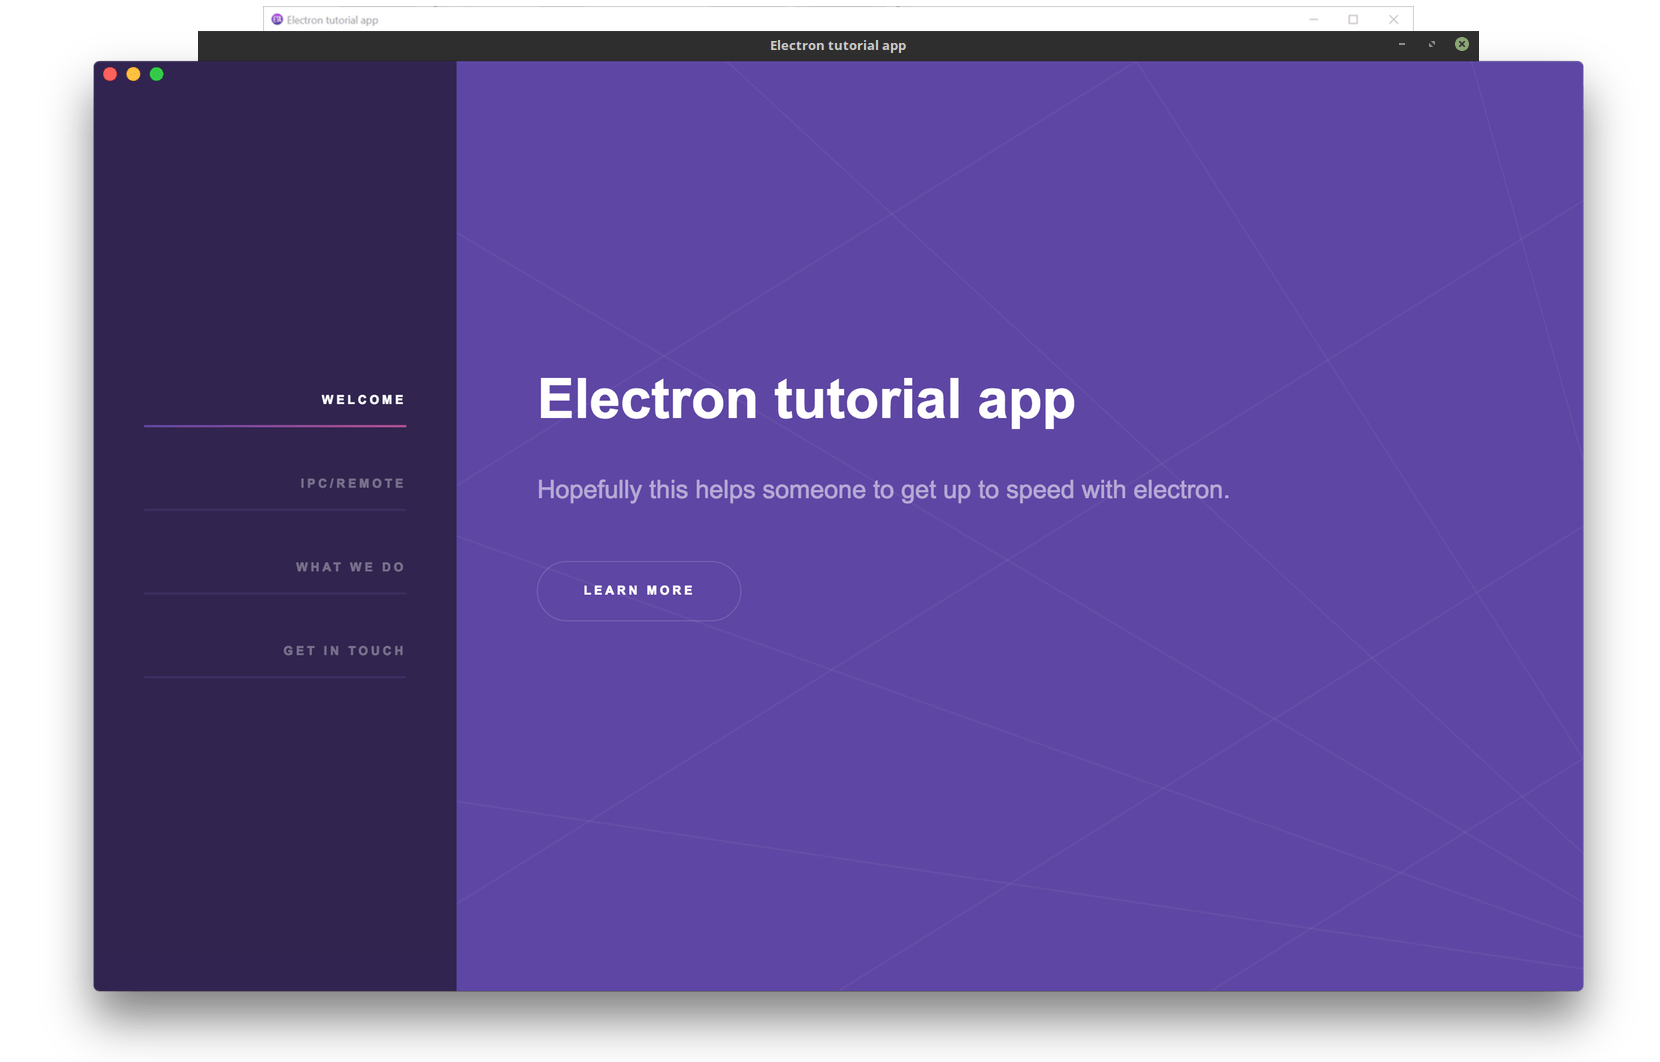 Electron tutorial app